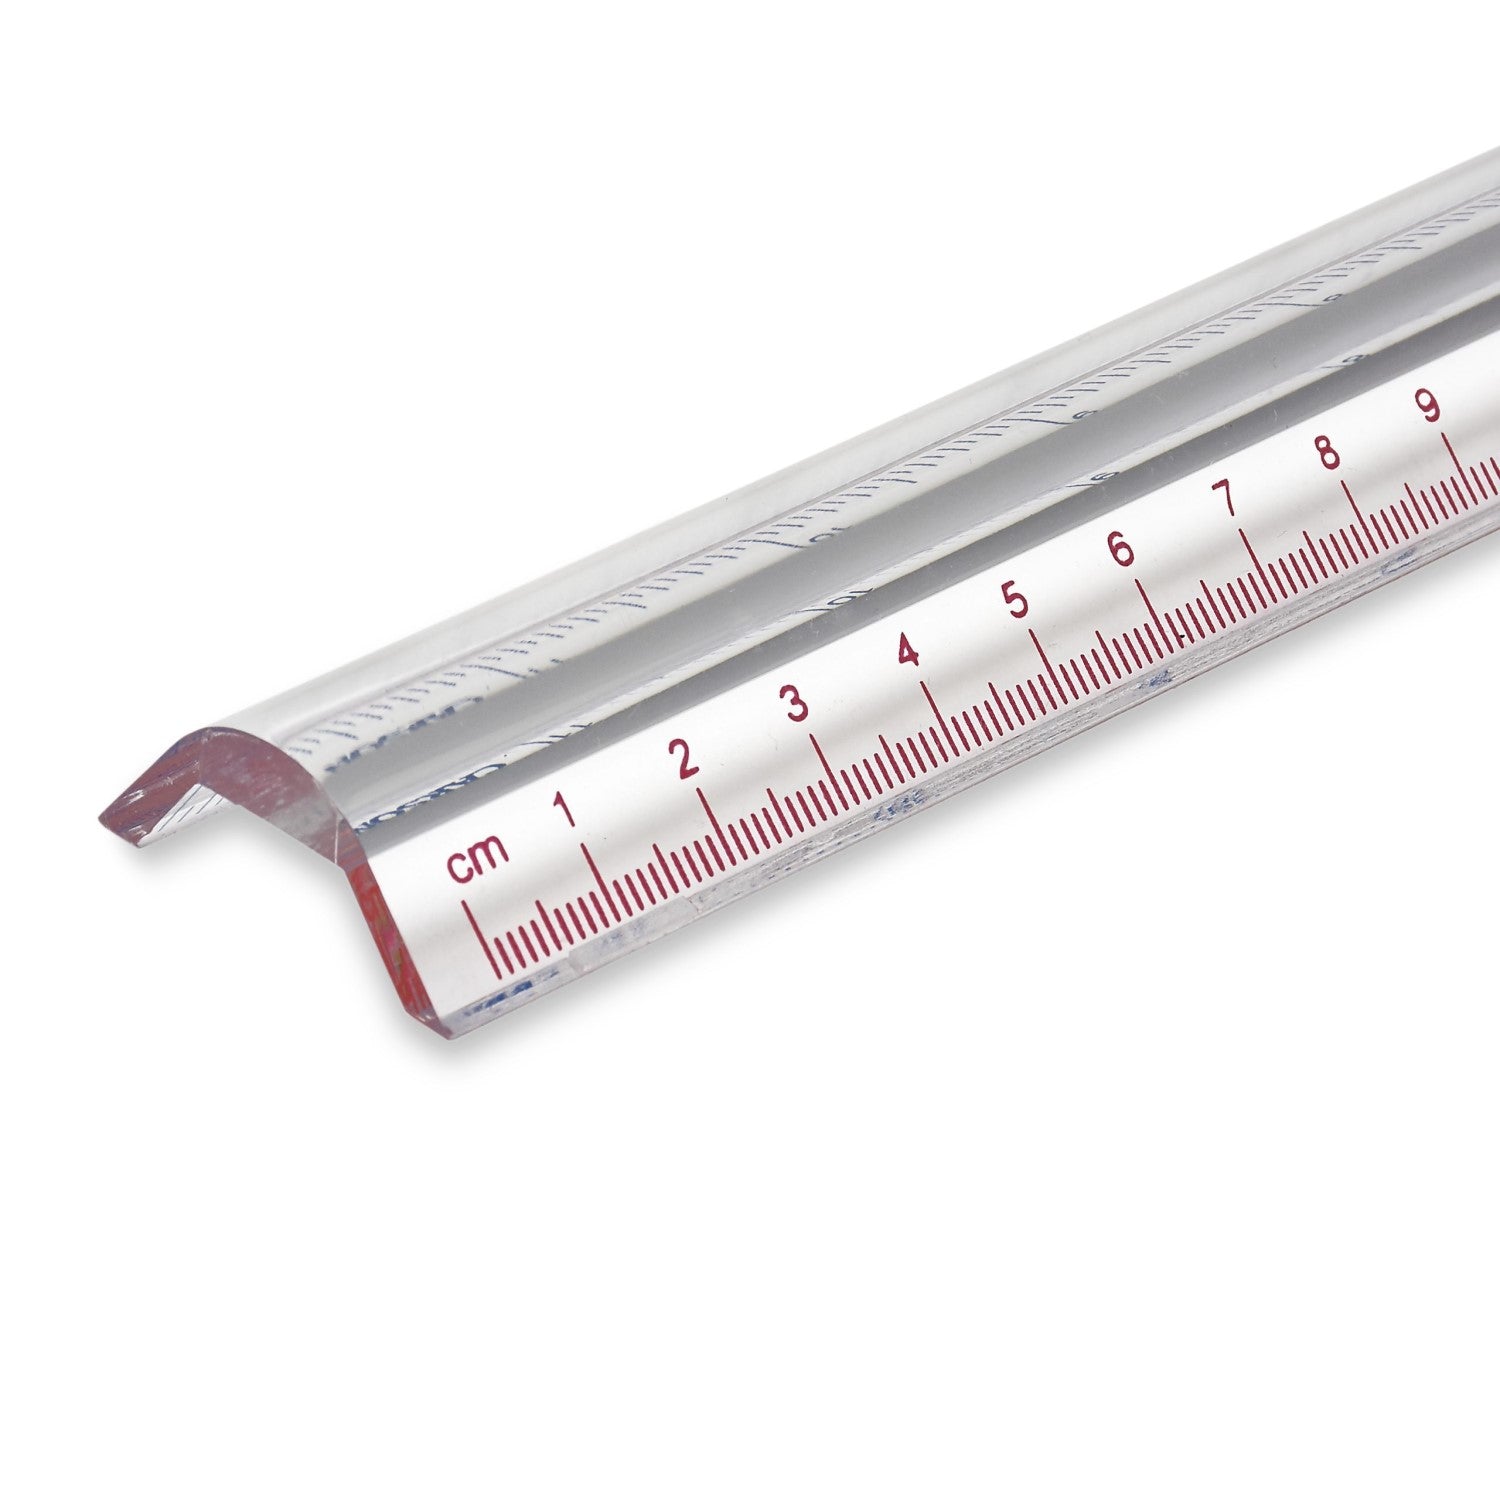 Image of the centimeter side on the Magnirule ruler.